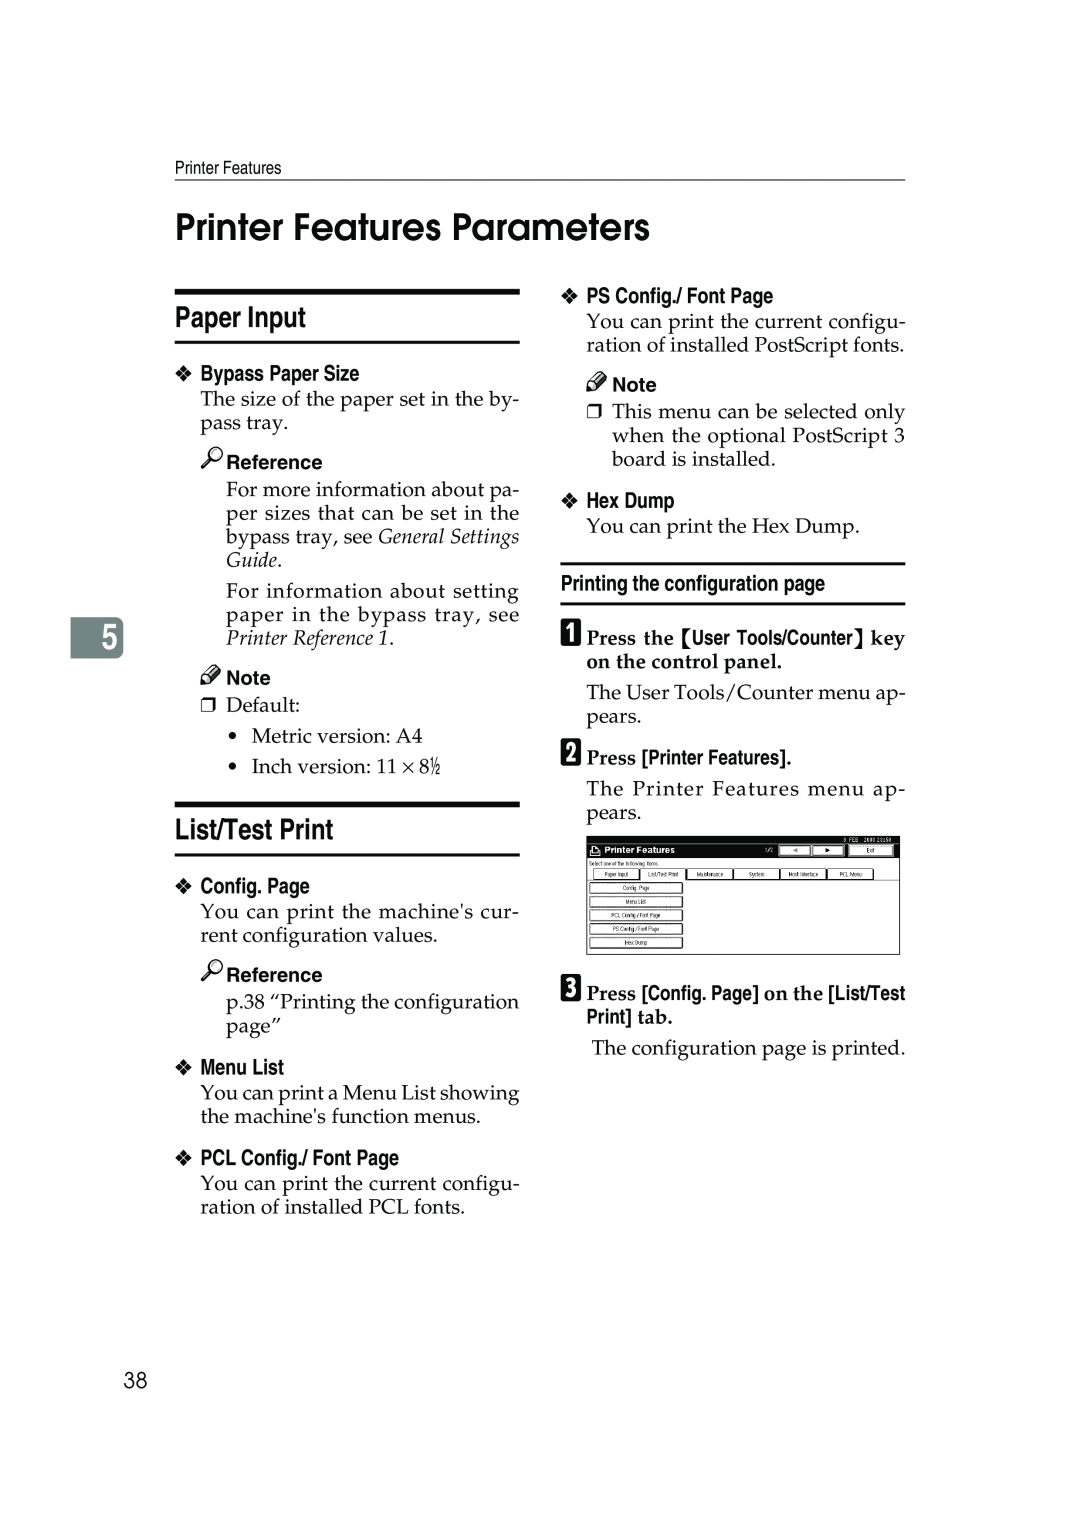 Xerox 2045e appendix Printer Features Parameters, Paper Input, List/Test Print, Bypass Paper Size, Config. Page, Hex Dump 